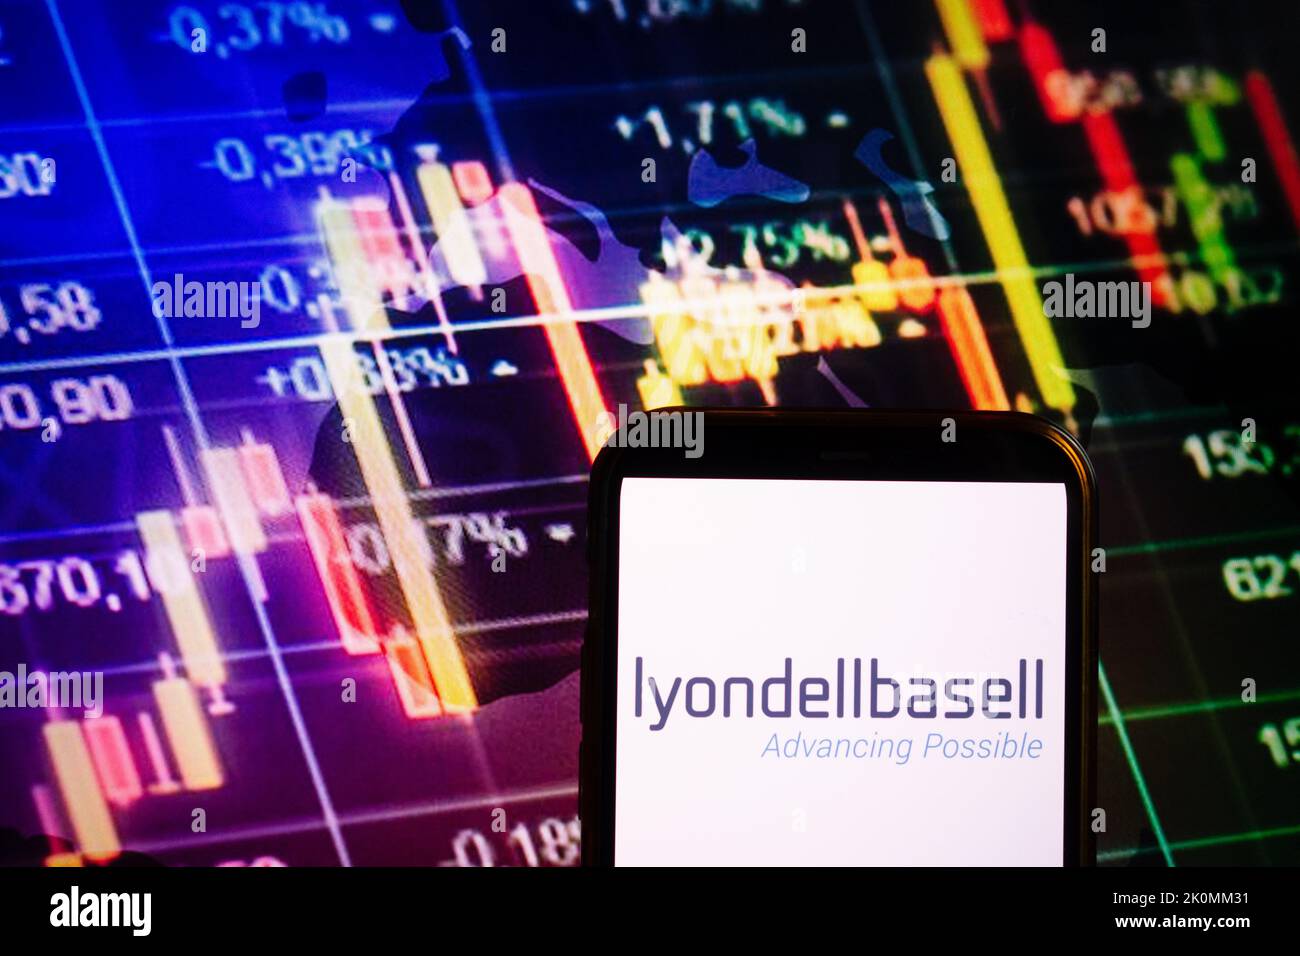 KONSKIE, POLAND - September 10, 2022: Smartphone displaying logo of LyondellBasell company on stock exchange diagram background Stock Photo